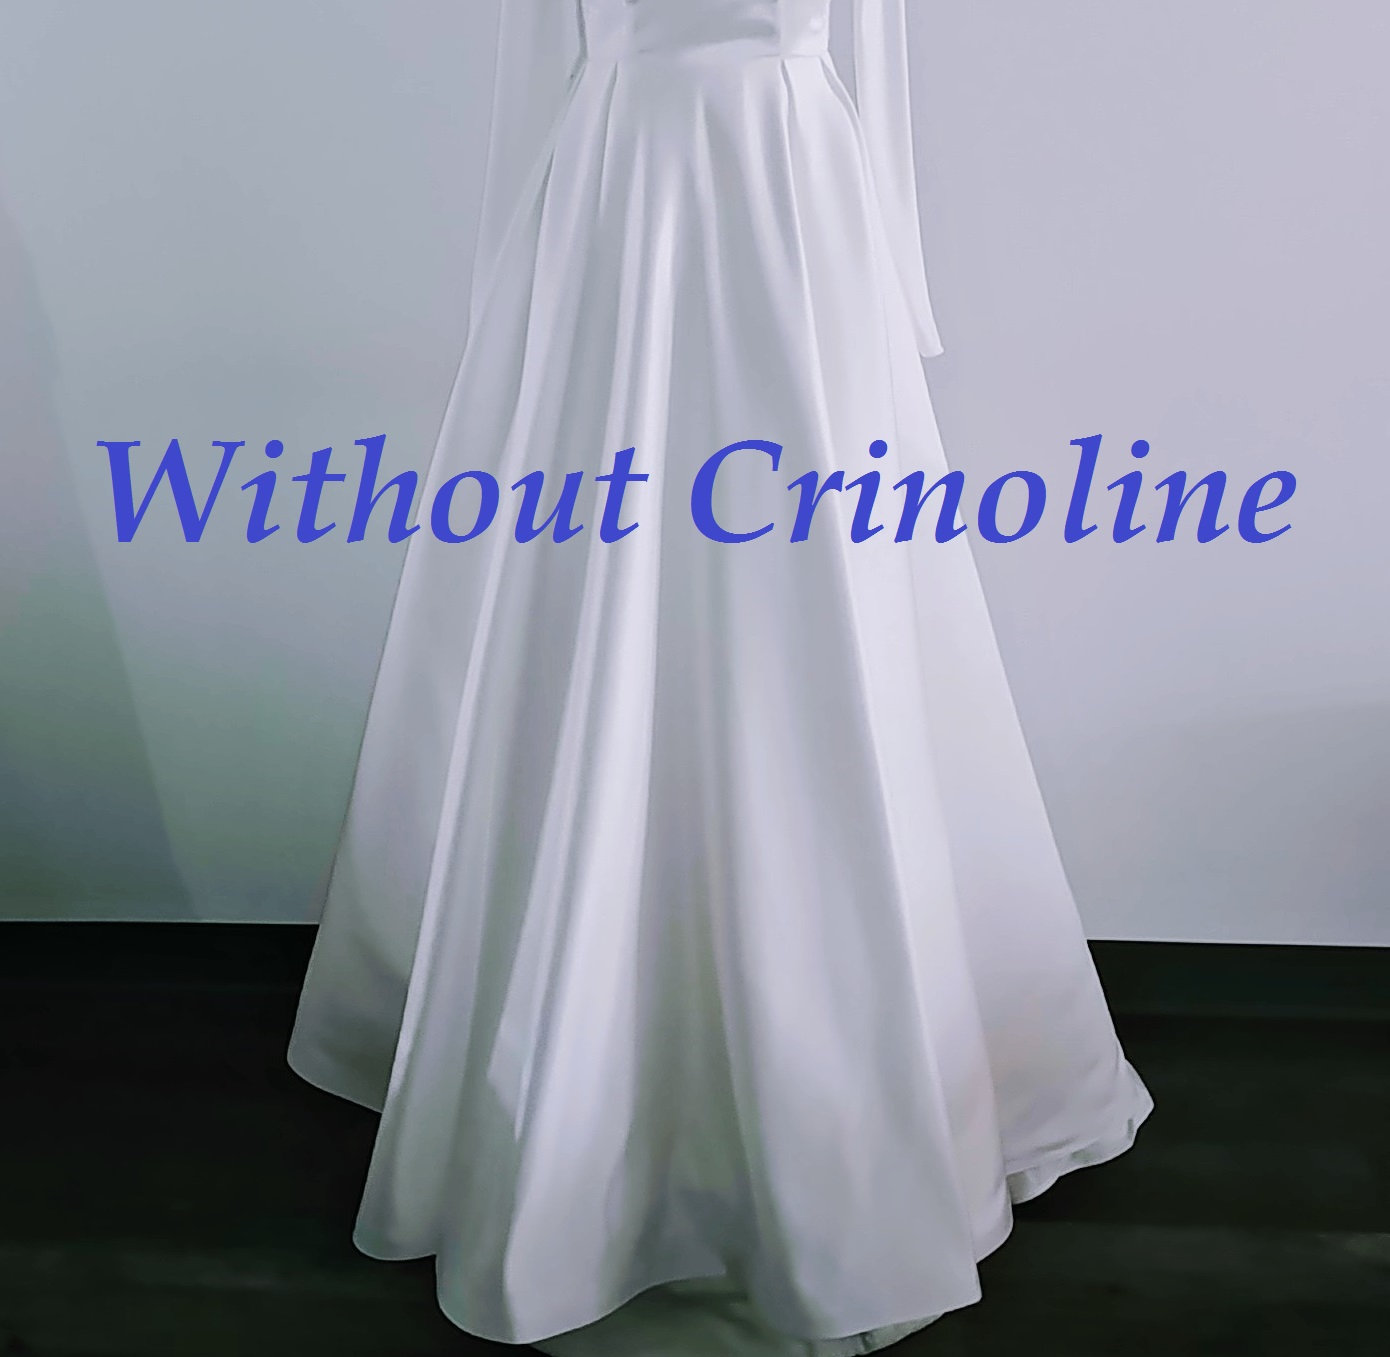 Magnificent Wedding Dress with a Crinoline, Classic Style. Woman Bride in  Lavish Wedding Dress. Light Background. Stock Image - Image of elegance,  crinoline: 117564919